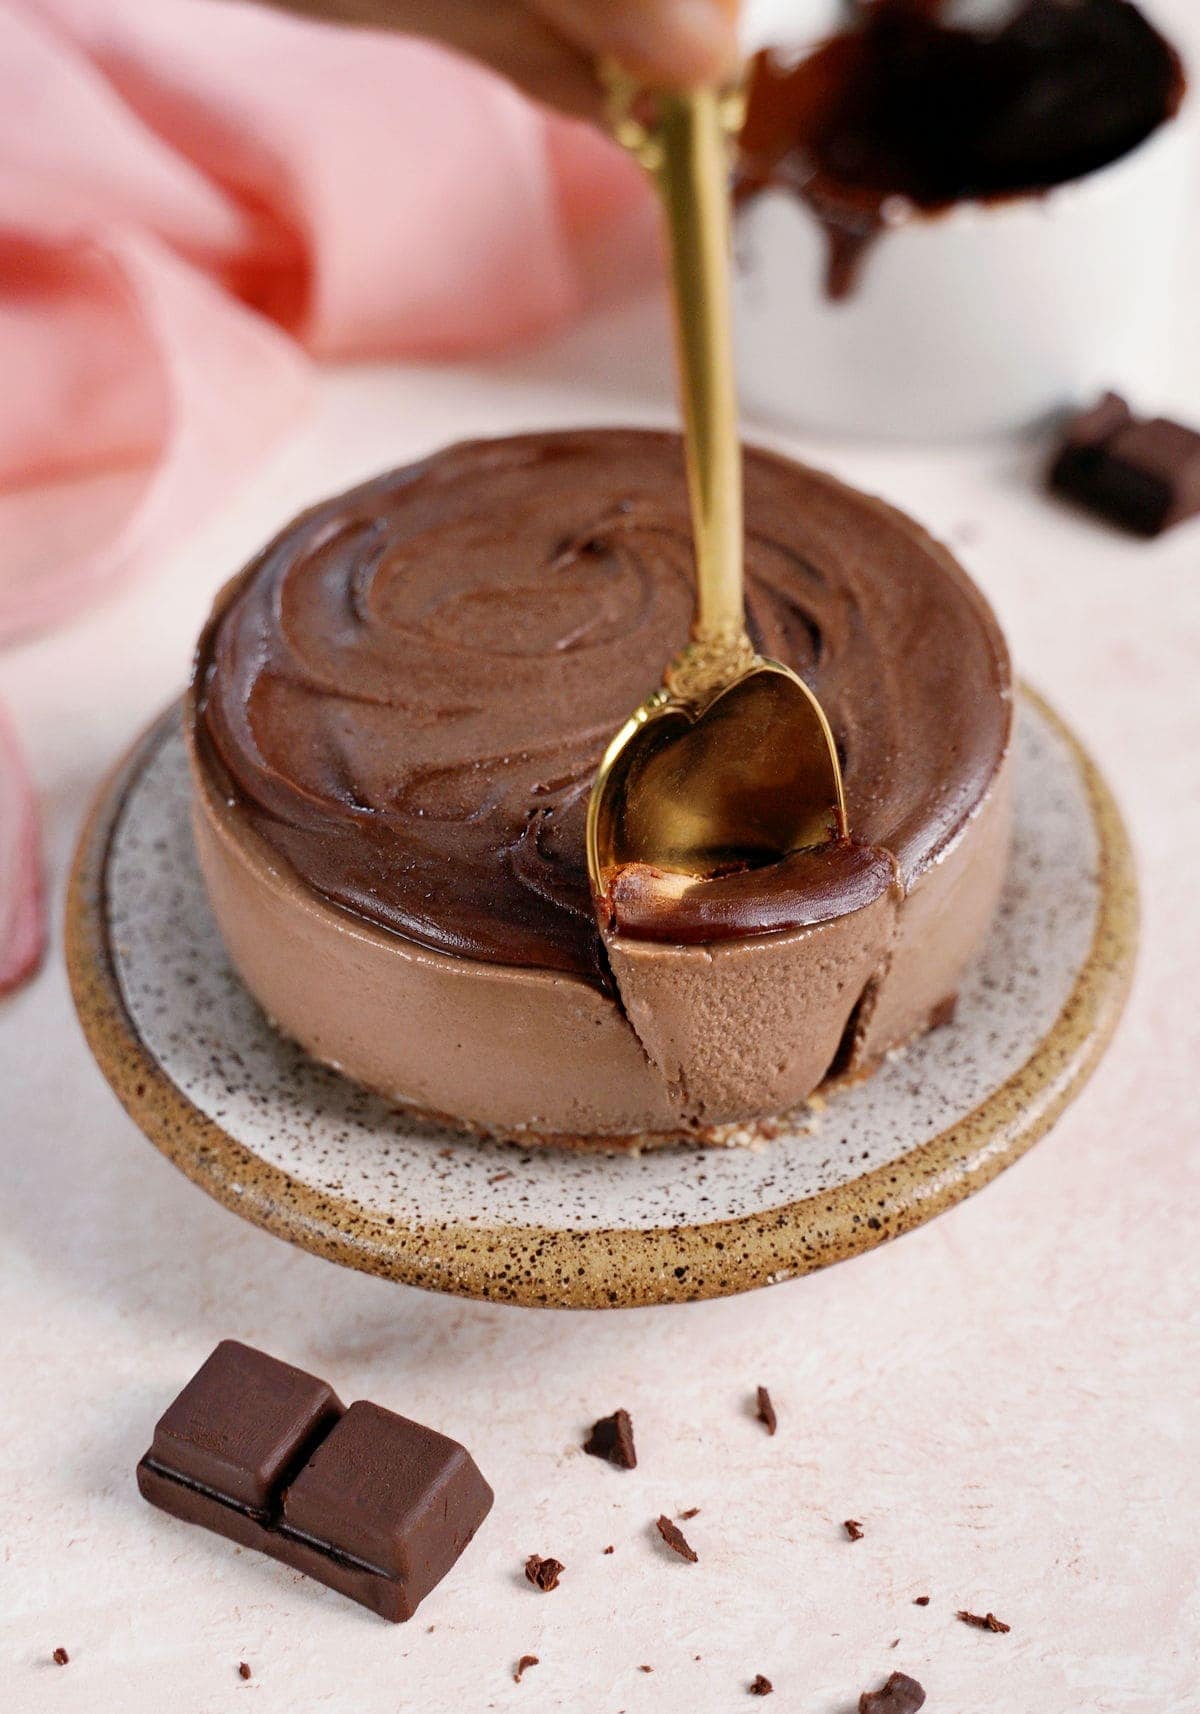 spoon submerged in vegan chocolate mousse cake